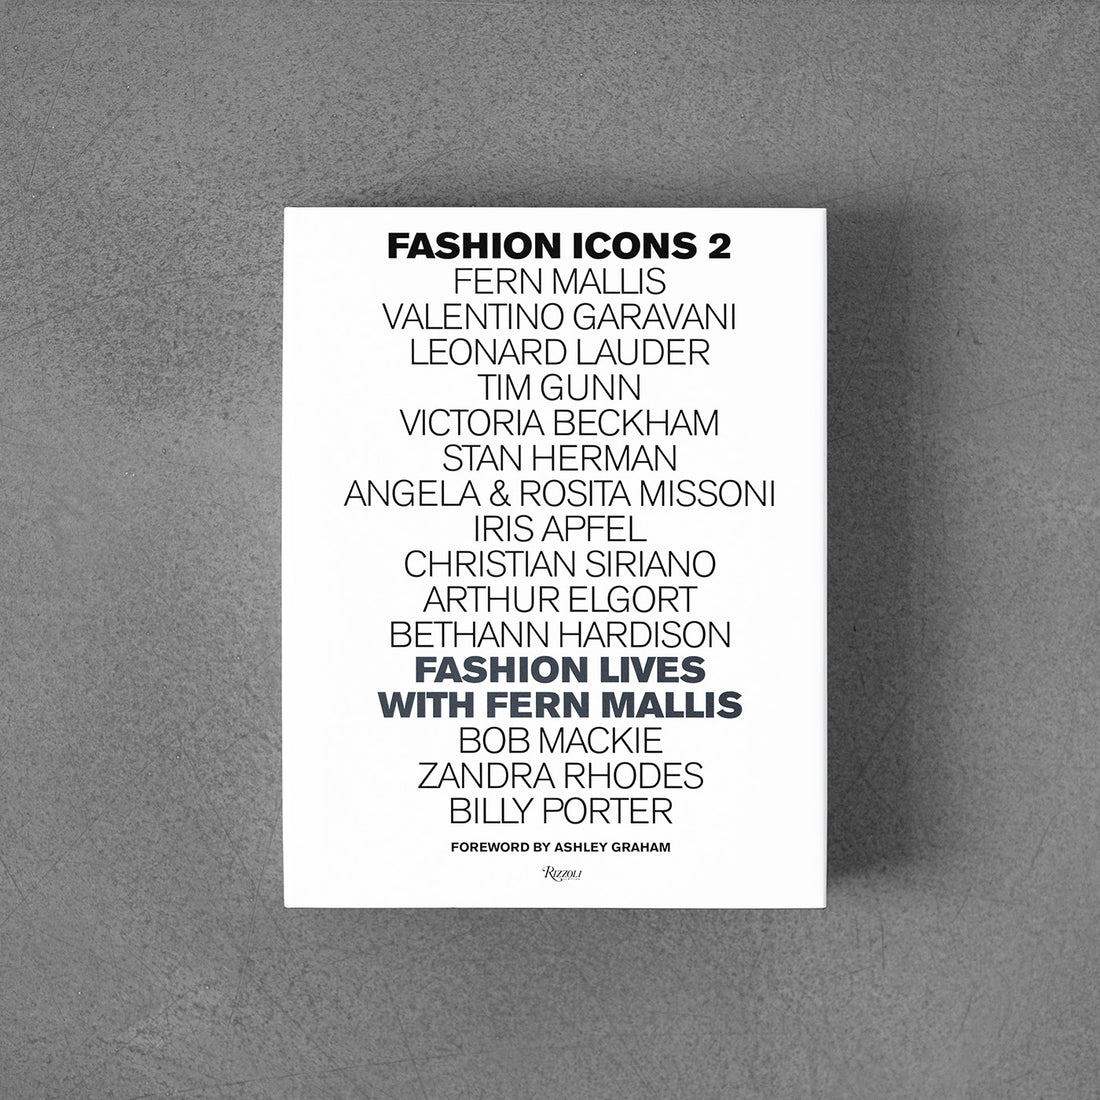 Fashion Icons: Fashion Icons with Fern Mallis